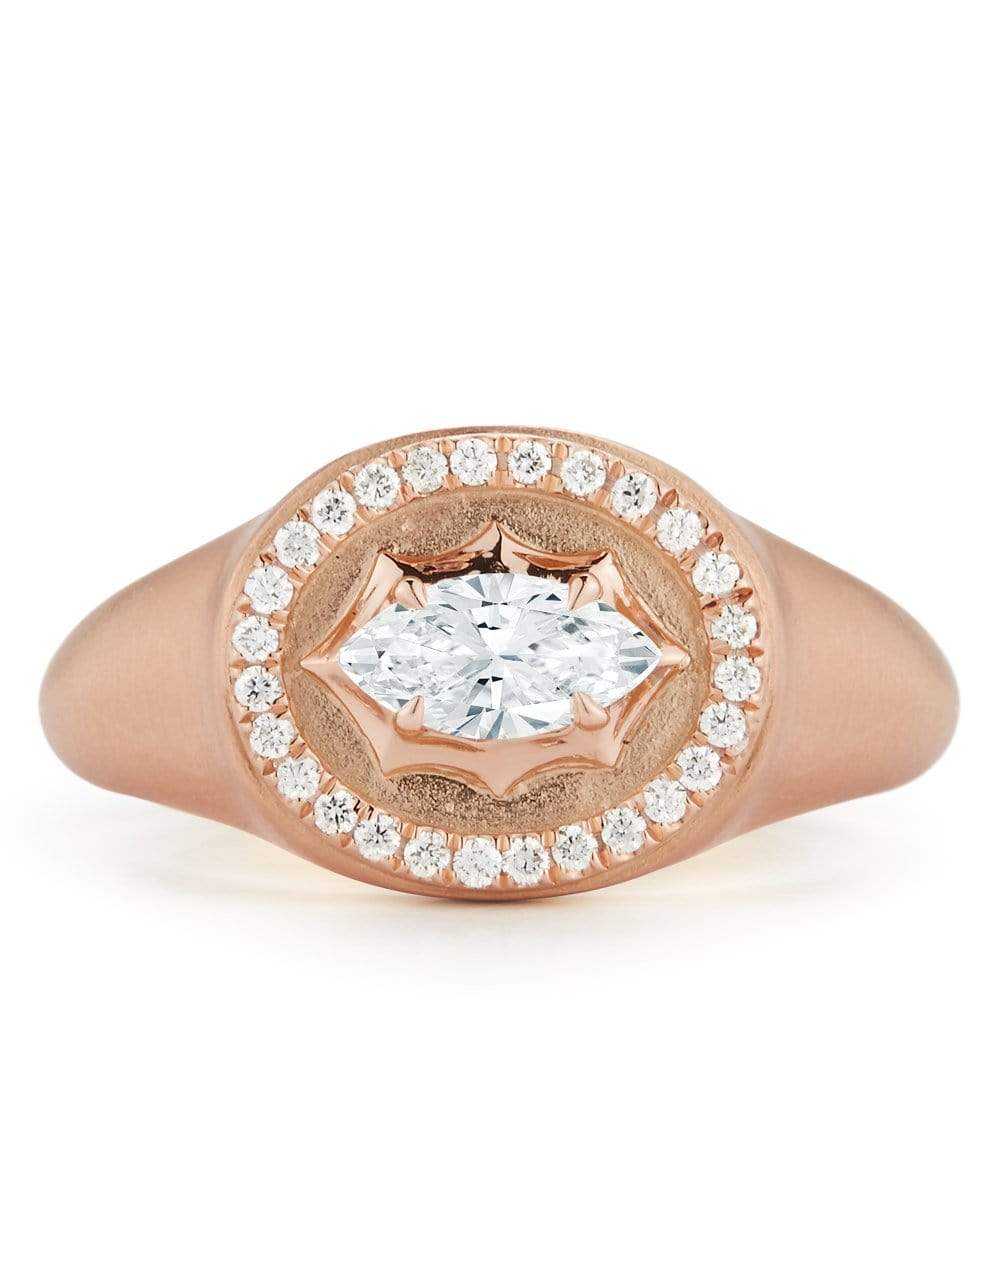 JADE TRAU-Maverick Marquise Diamond Signet Ring-ROSE GOLD